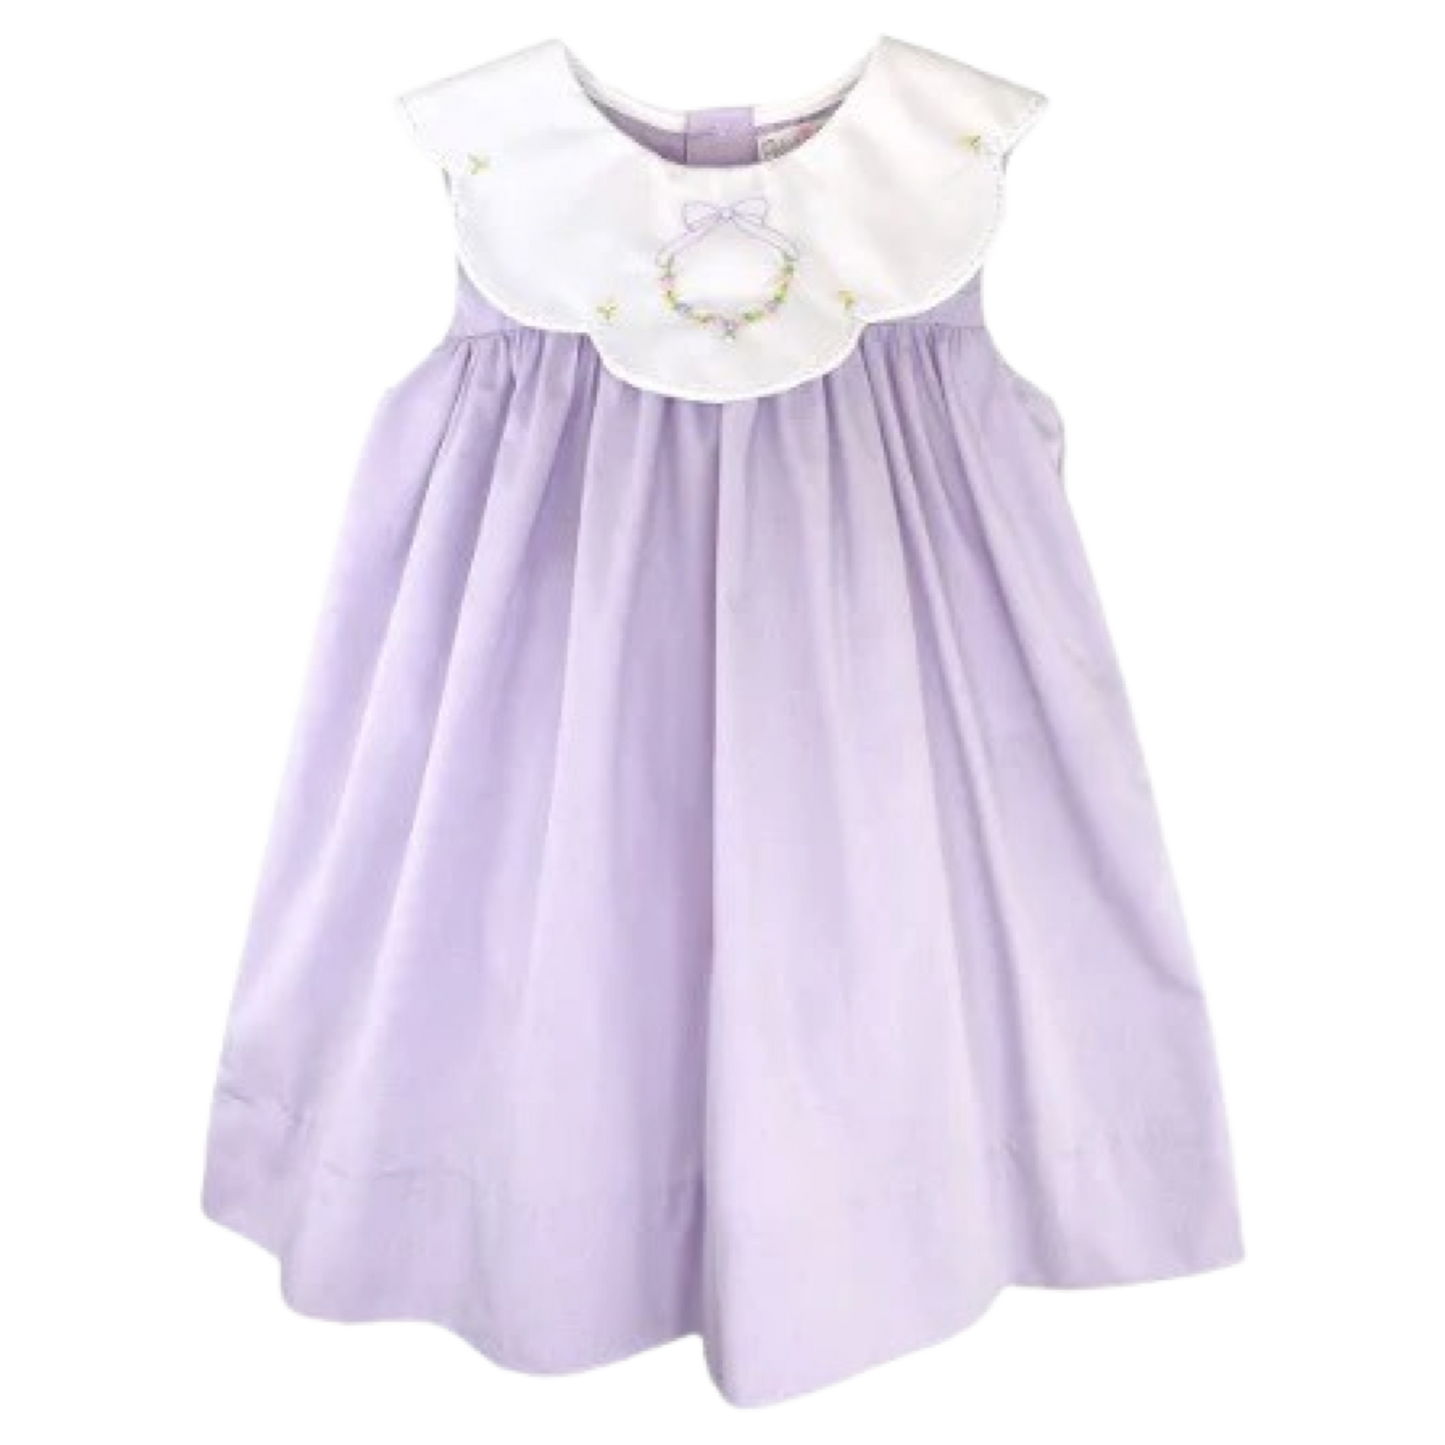 PA Dress - Lavender Floral